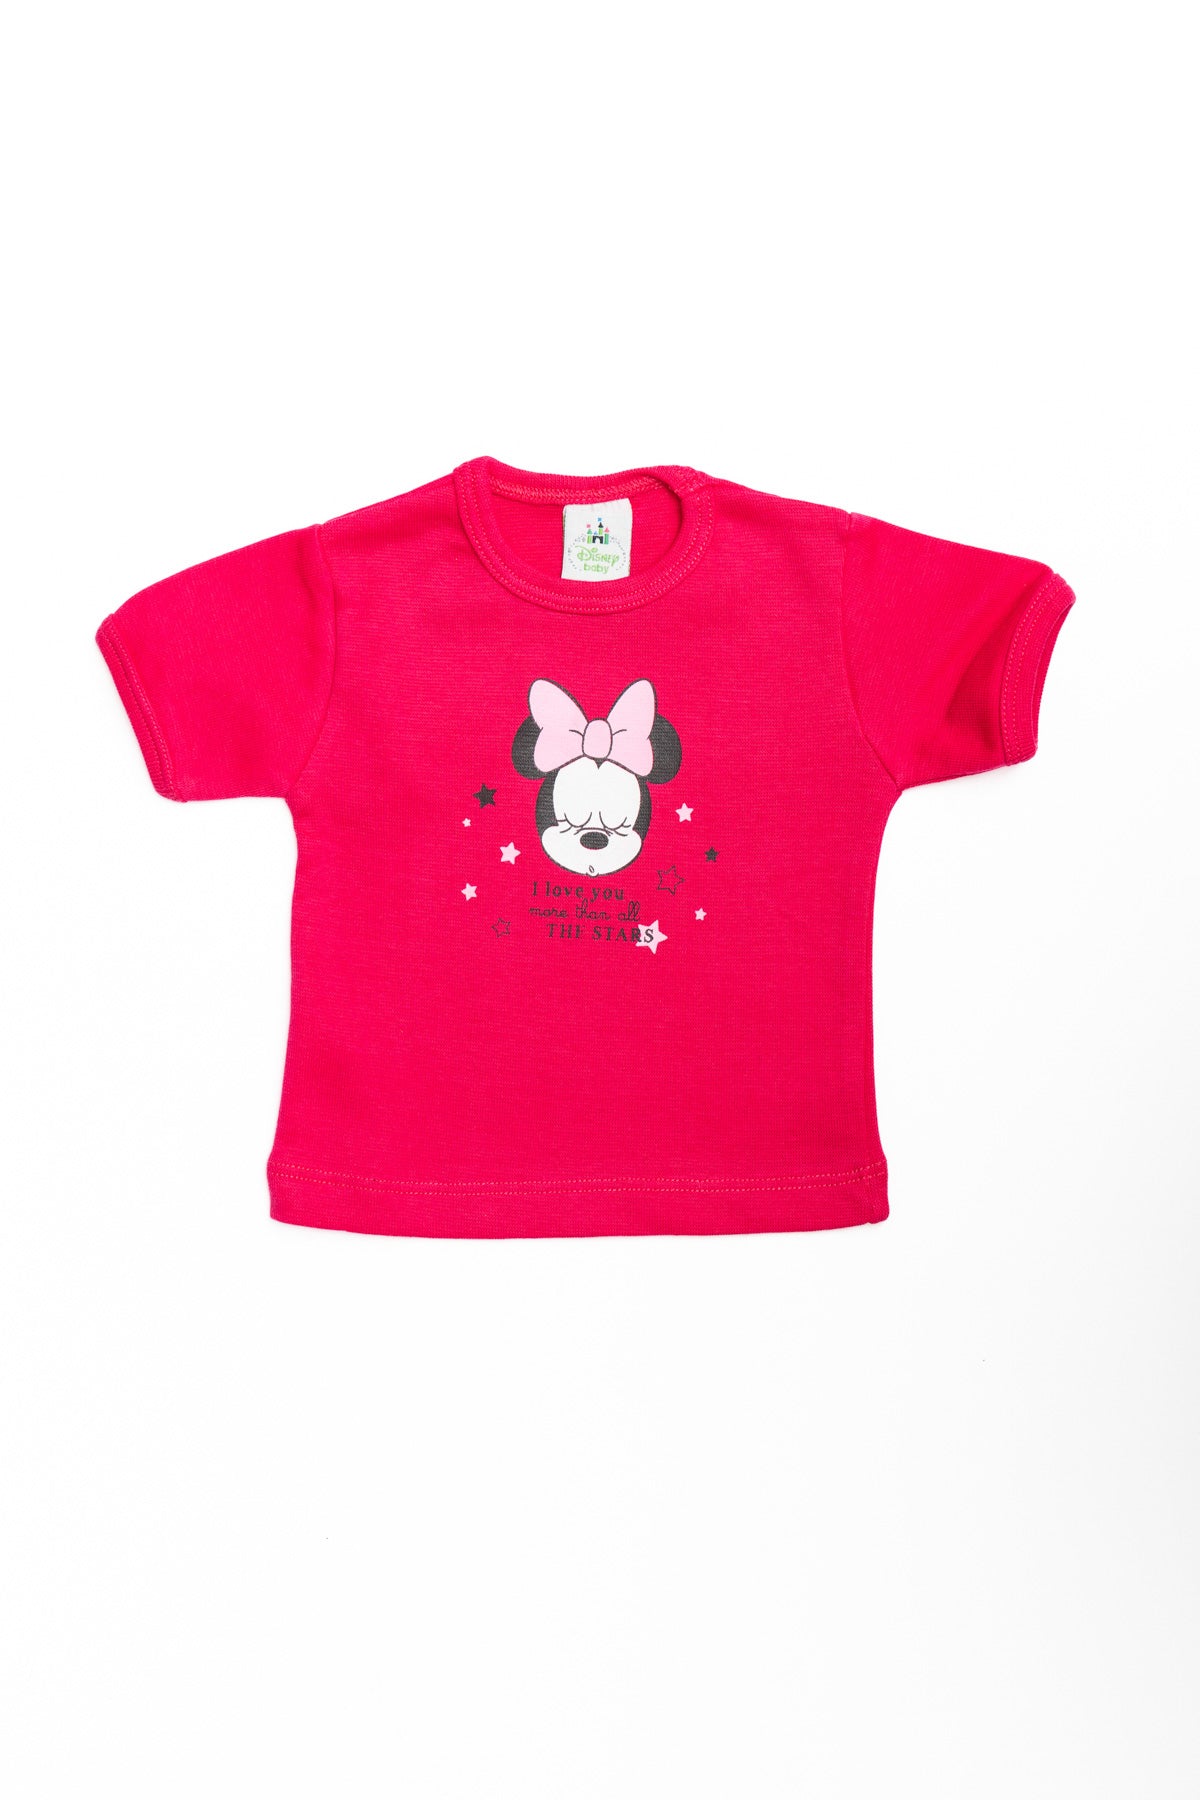 T-Shirt Baby Minnie " I Love you" Half sleeve 4907